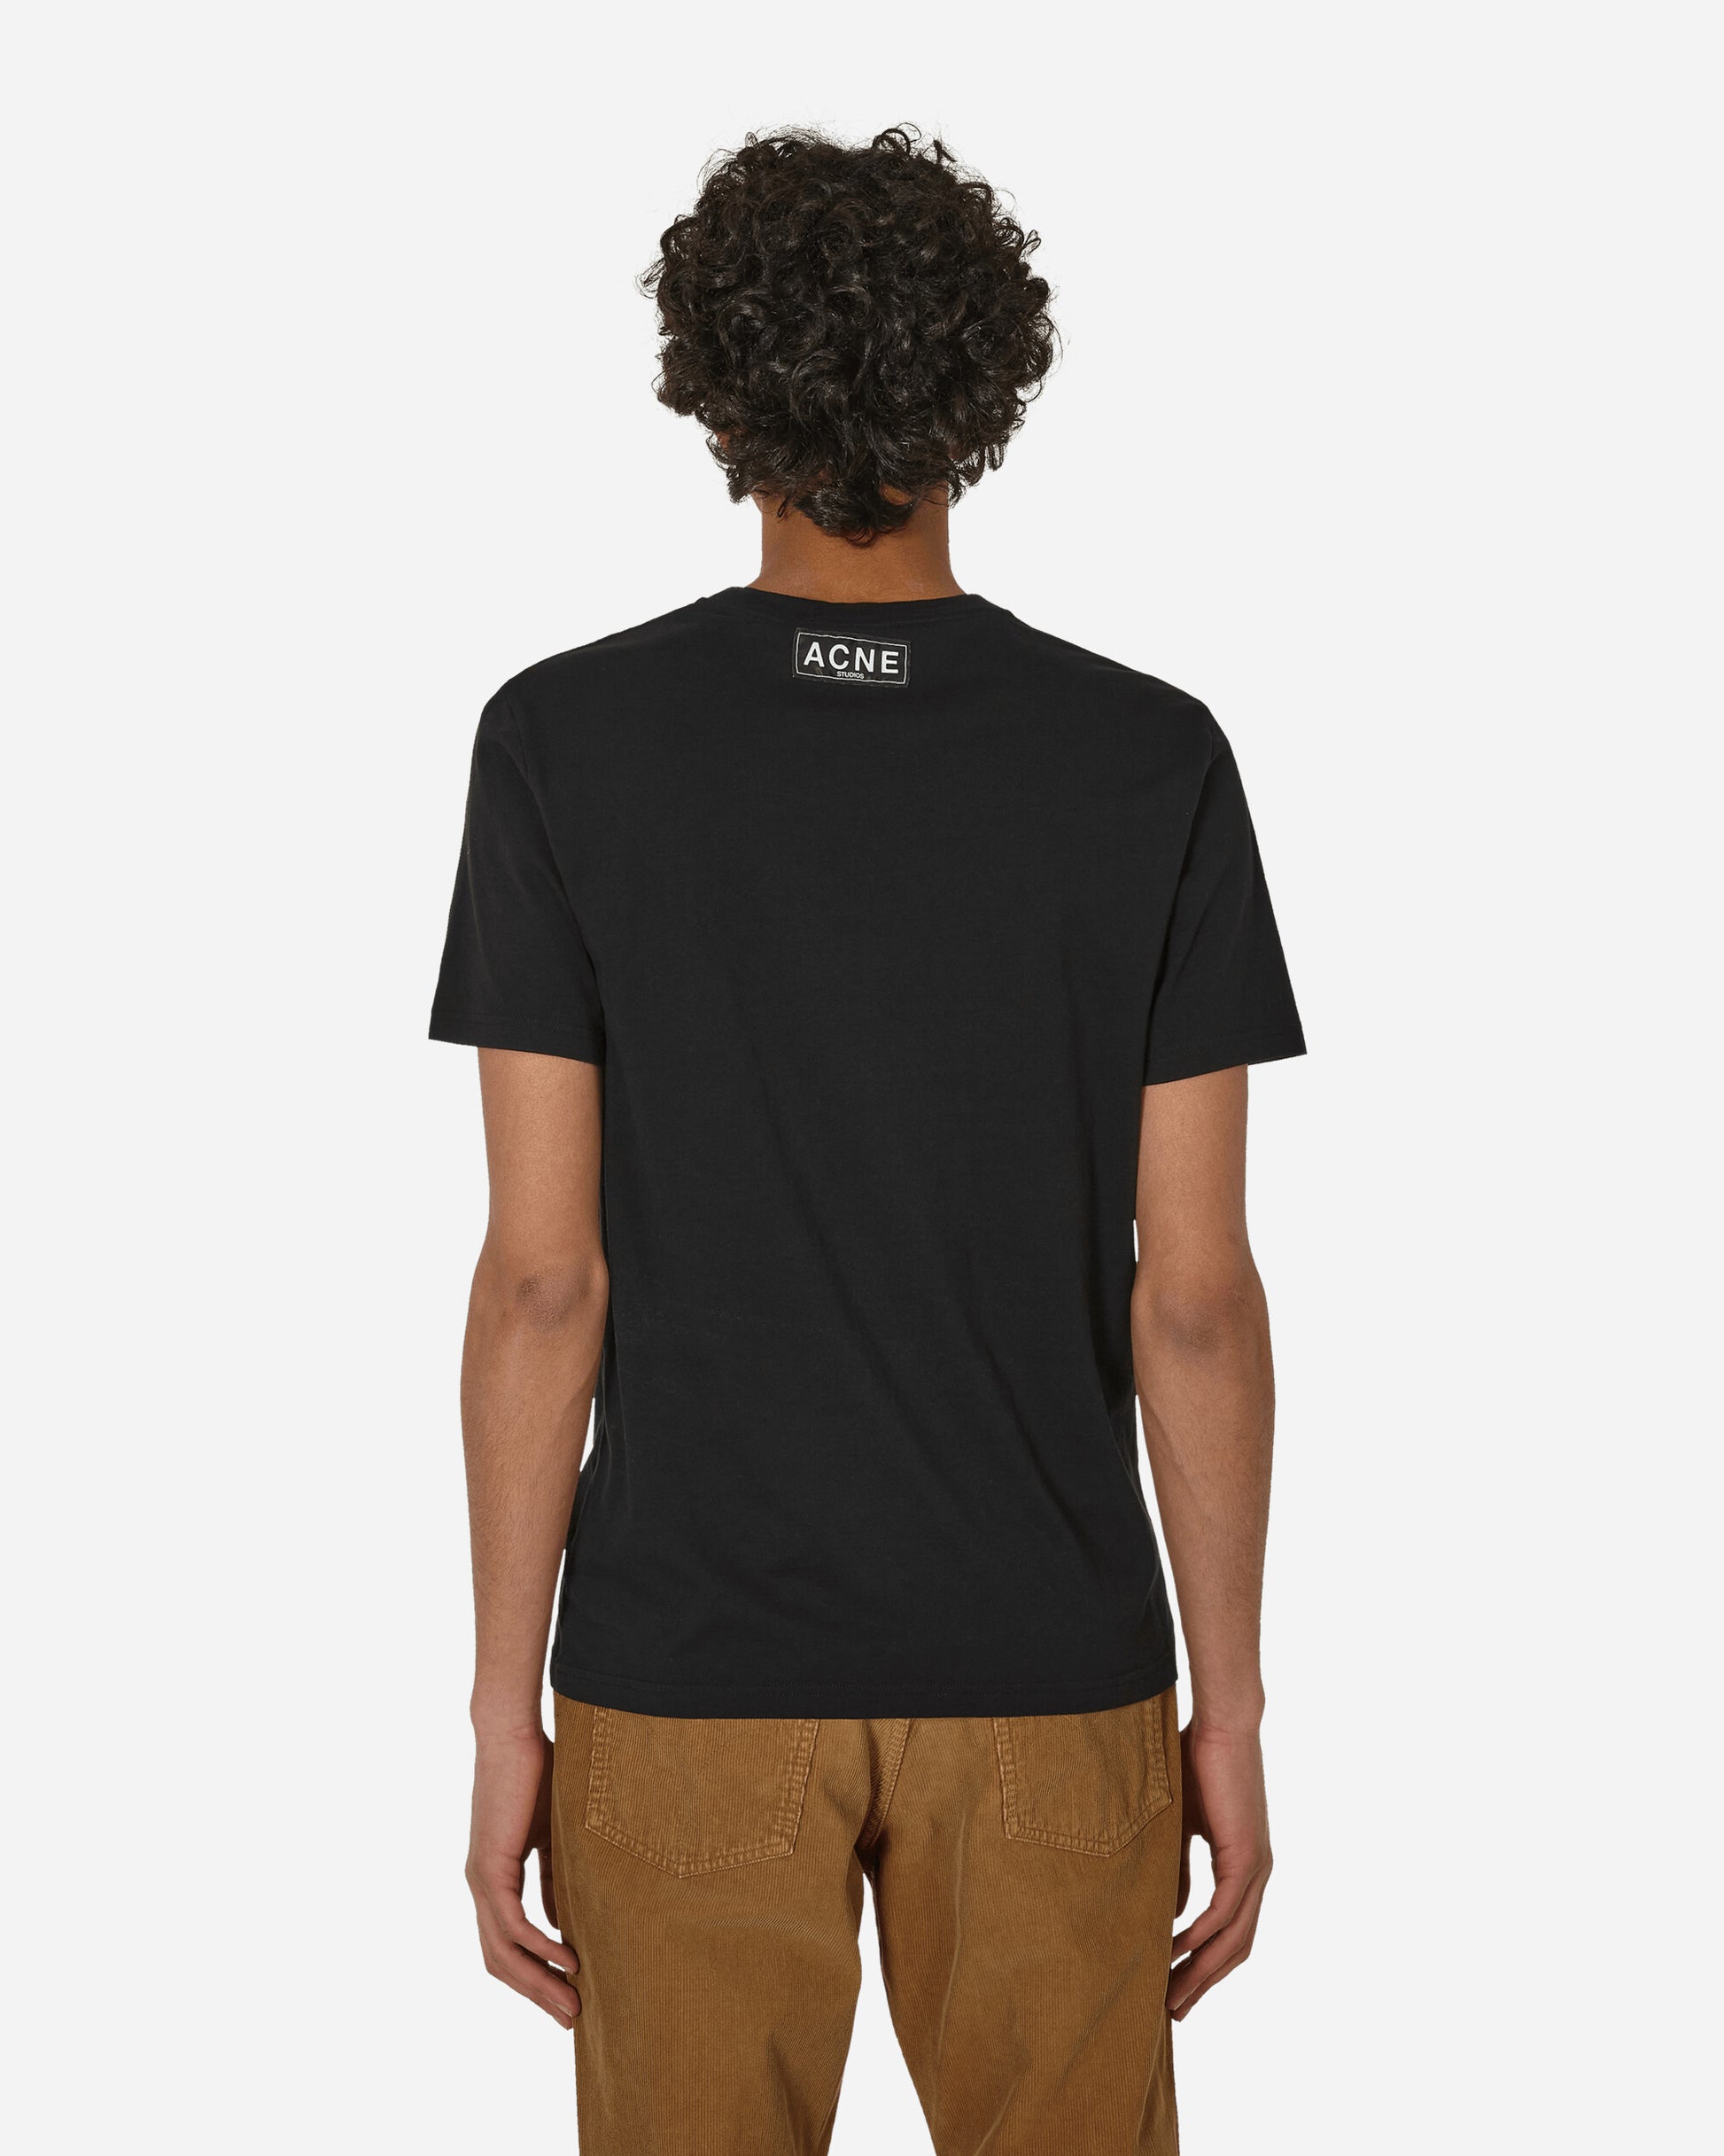 Acne Studios T-Shirt Black T-Shirts Shortsleeve CL0265- 900